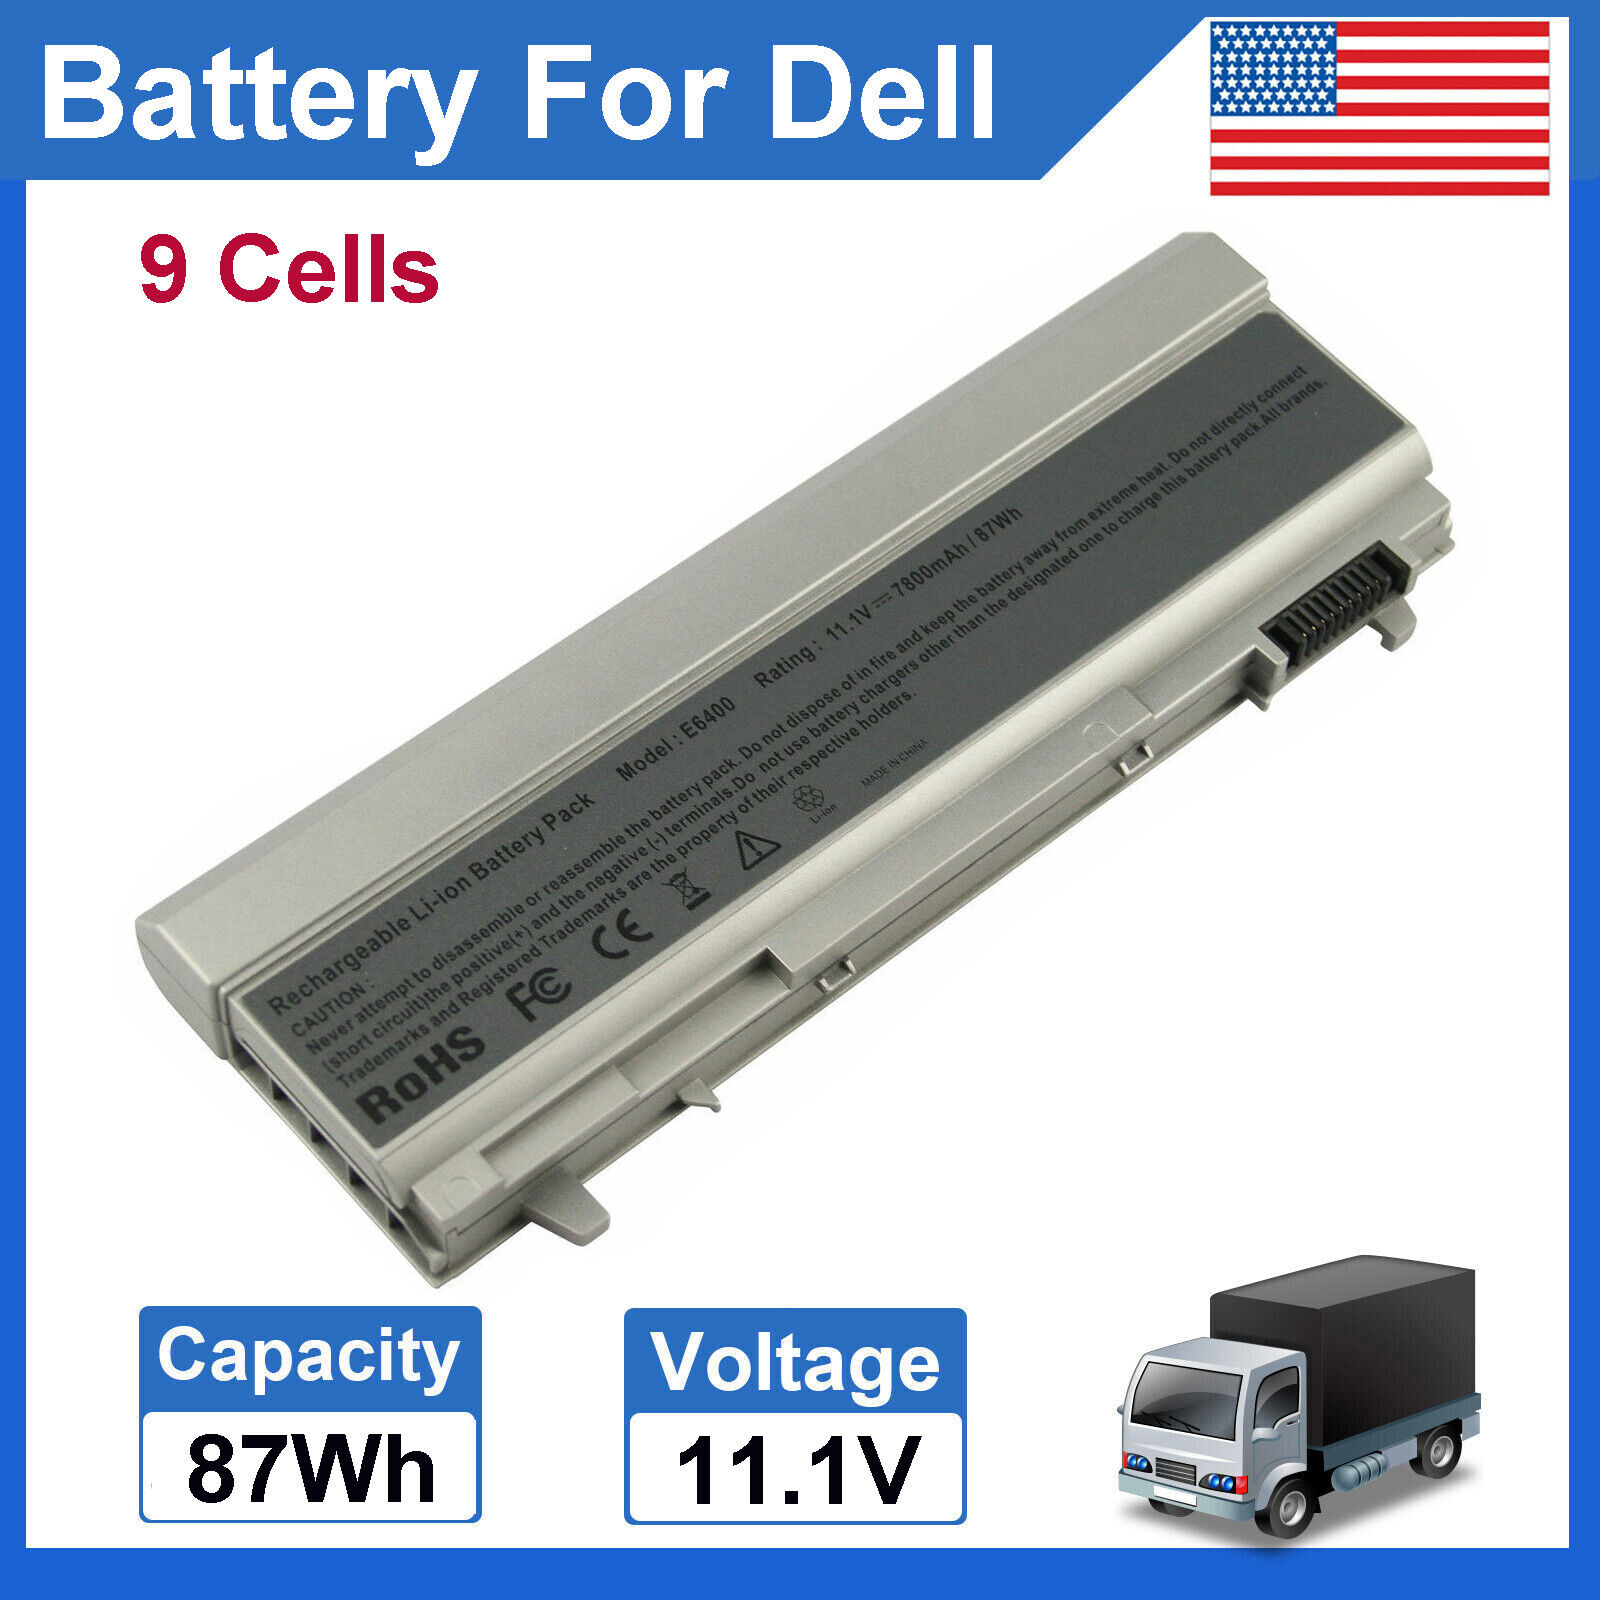 9 Cells Battery For Dell Latitude E6400 E6410 E6500 E6510 PT434 KY477 KY265 87Wh